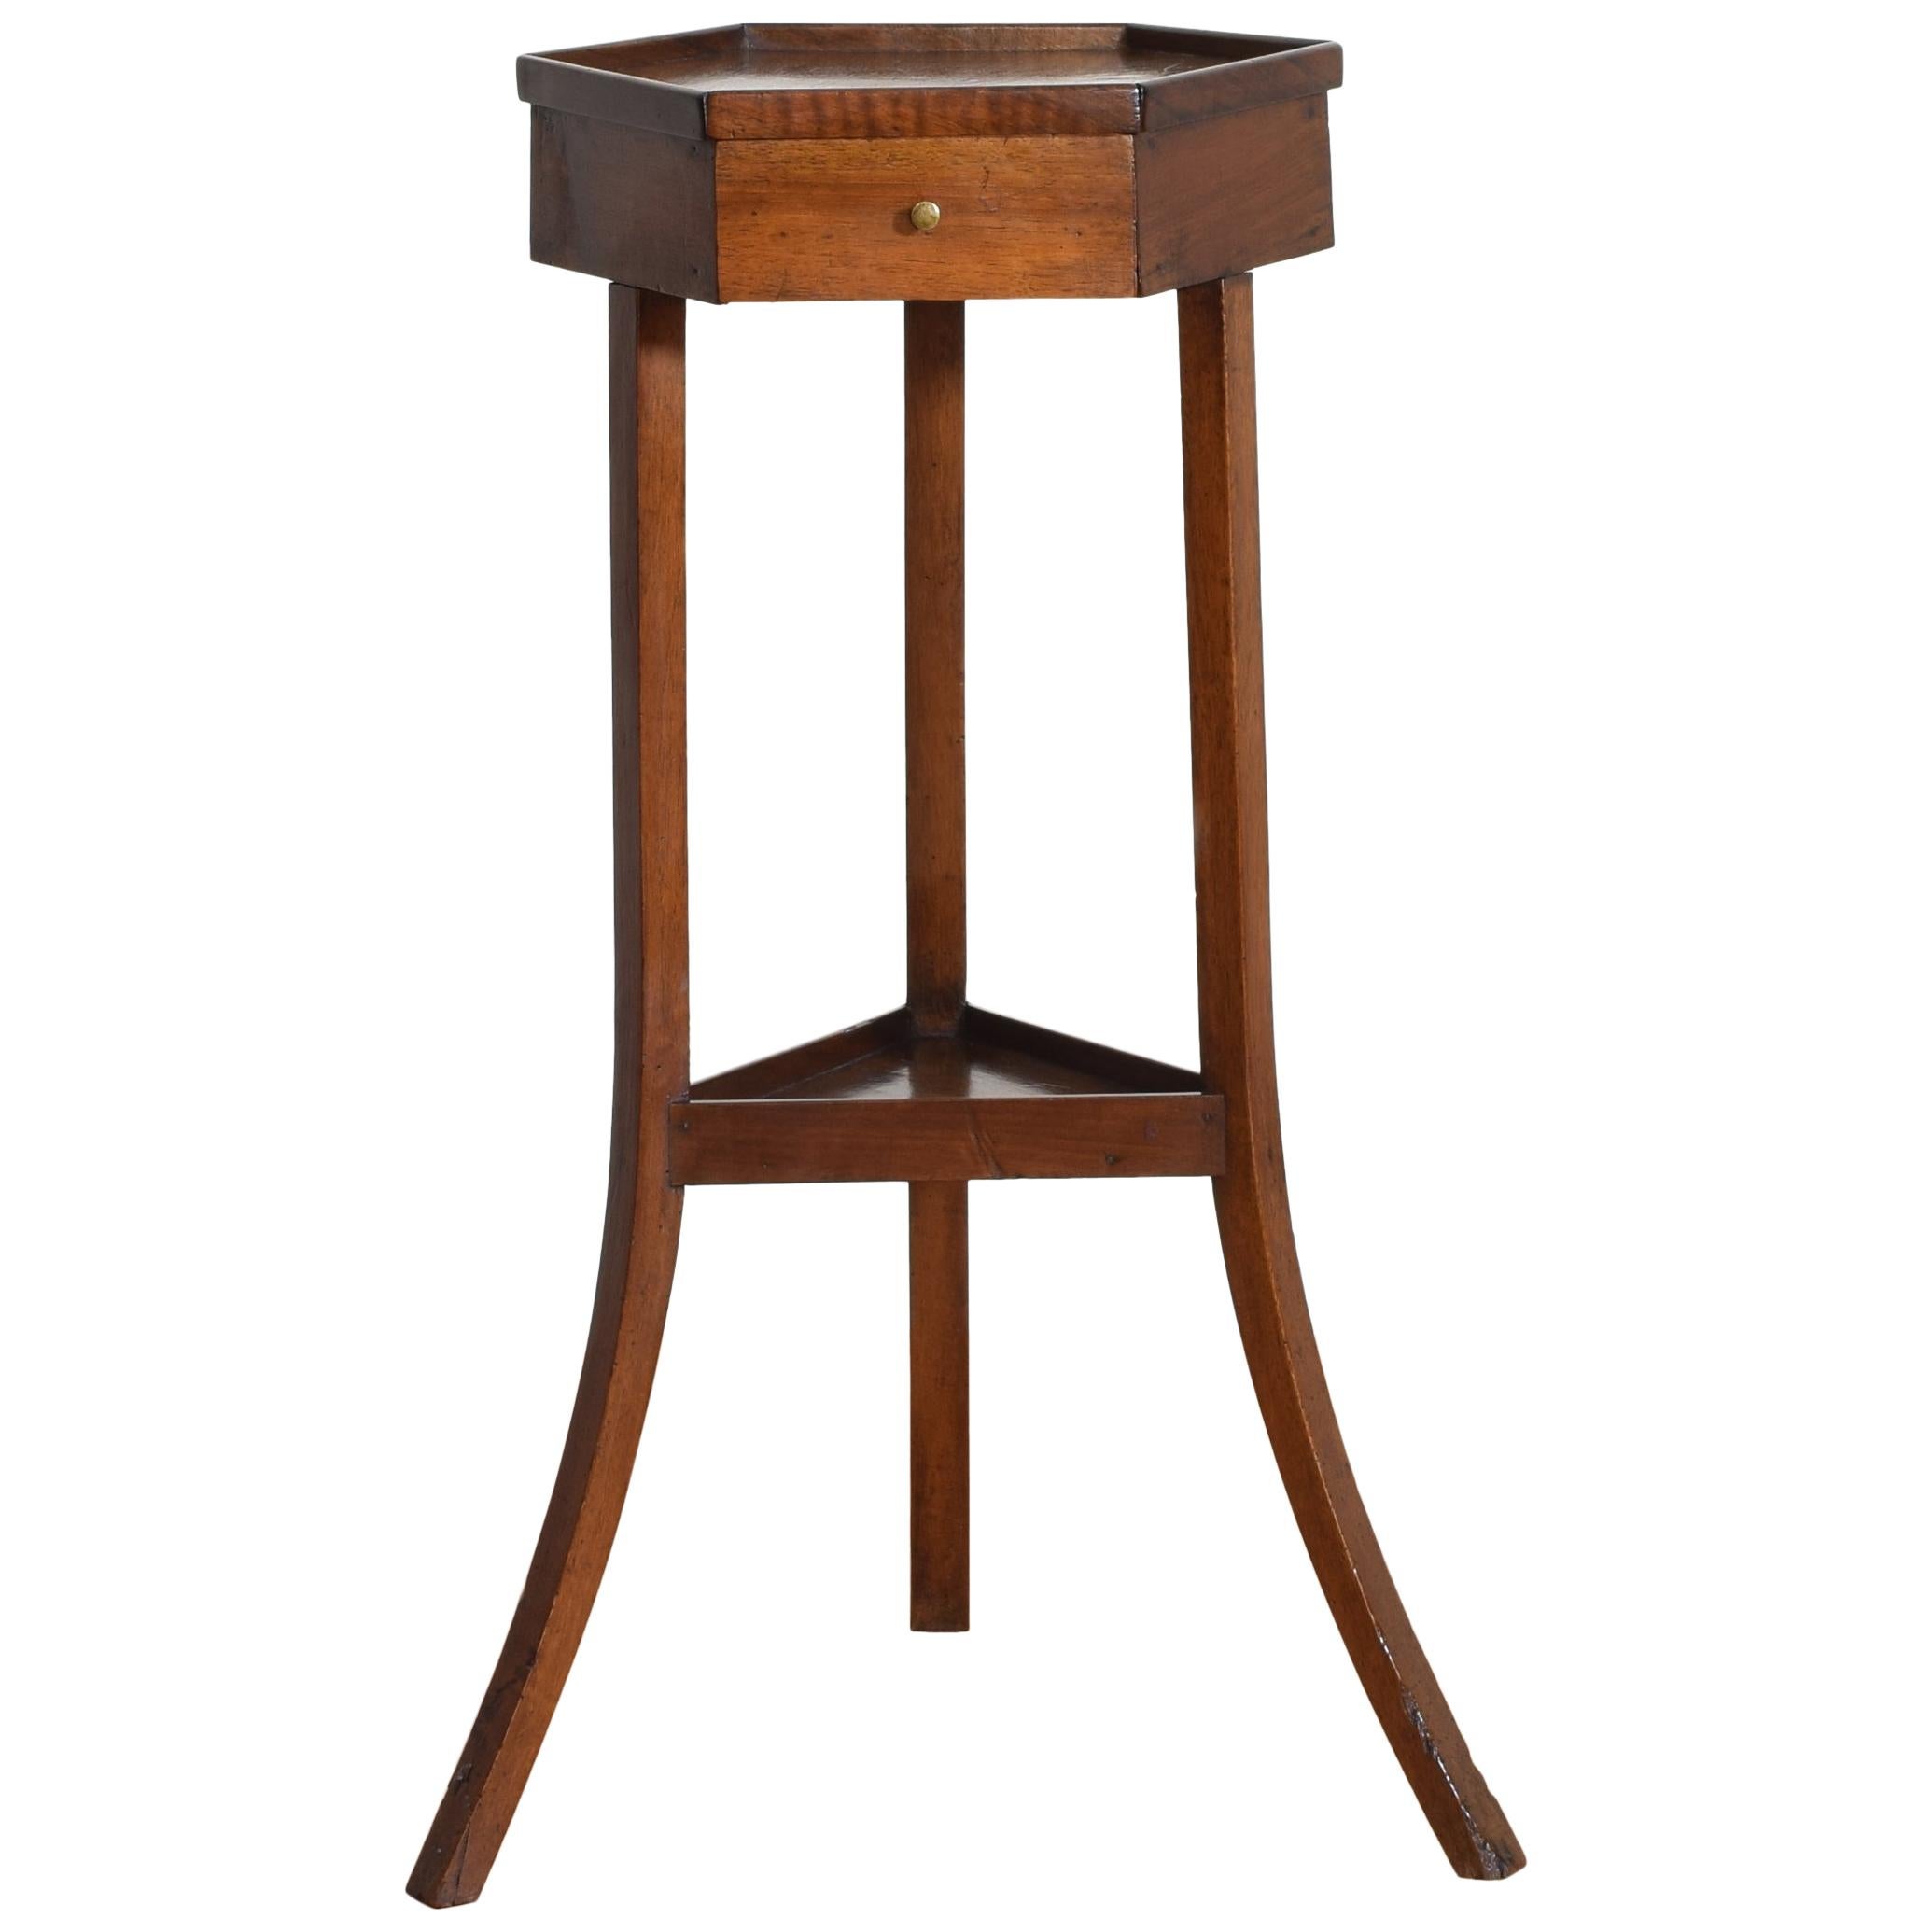 French Directoire Period Walnut Hexagonal 1-Drawer Pedestal Table